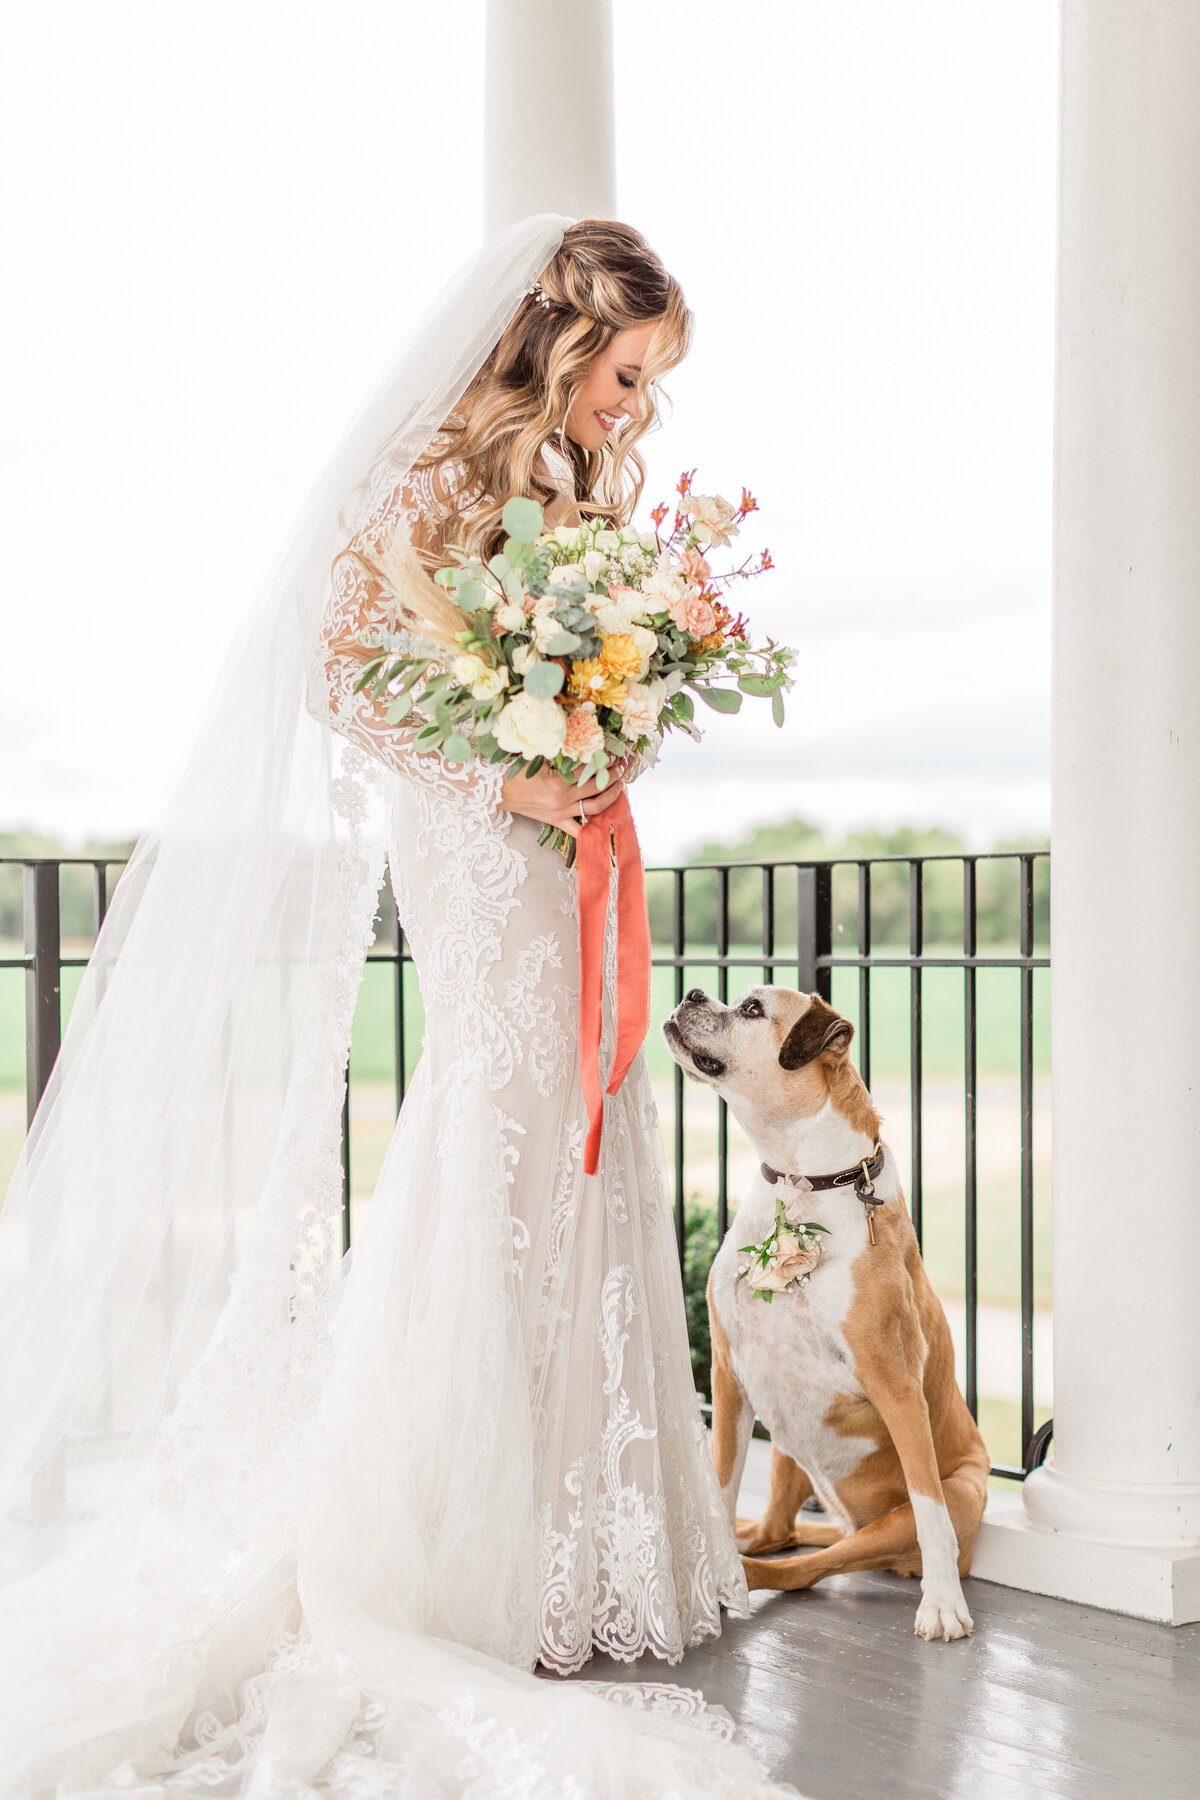 Rachel+Cody-Wedding-KingGeorge_KelseyMariePhotography-October2021-7736